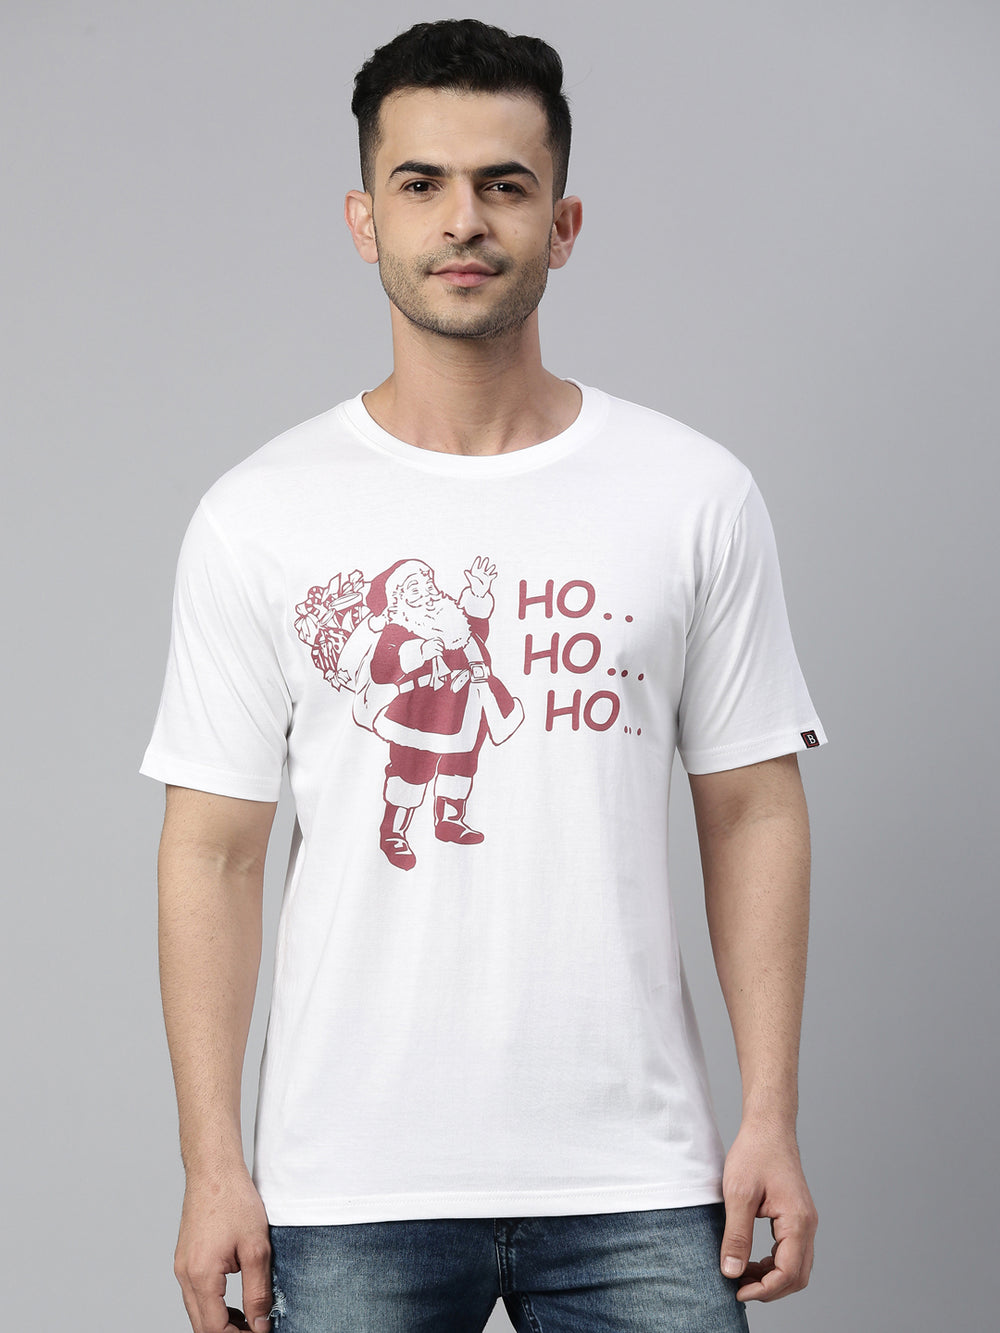 Ho Ho Ho!! Santa T-Shirt Graphic T-Shirts Bushirt   